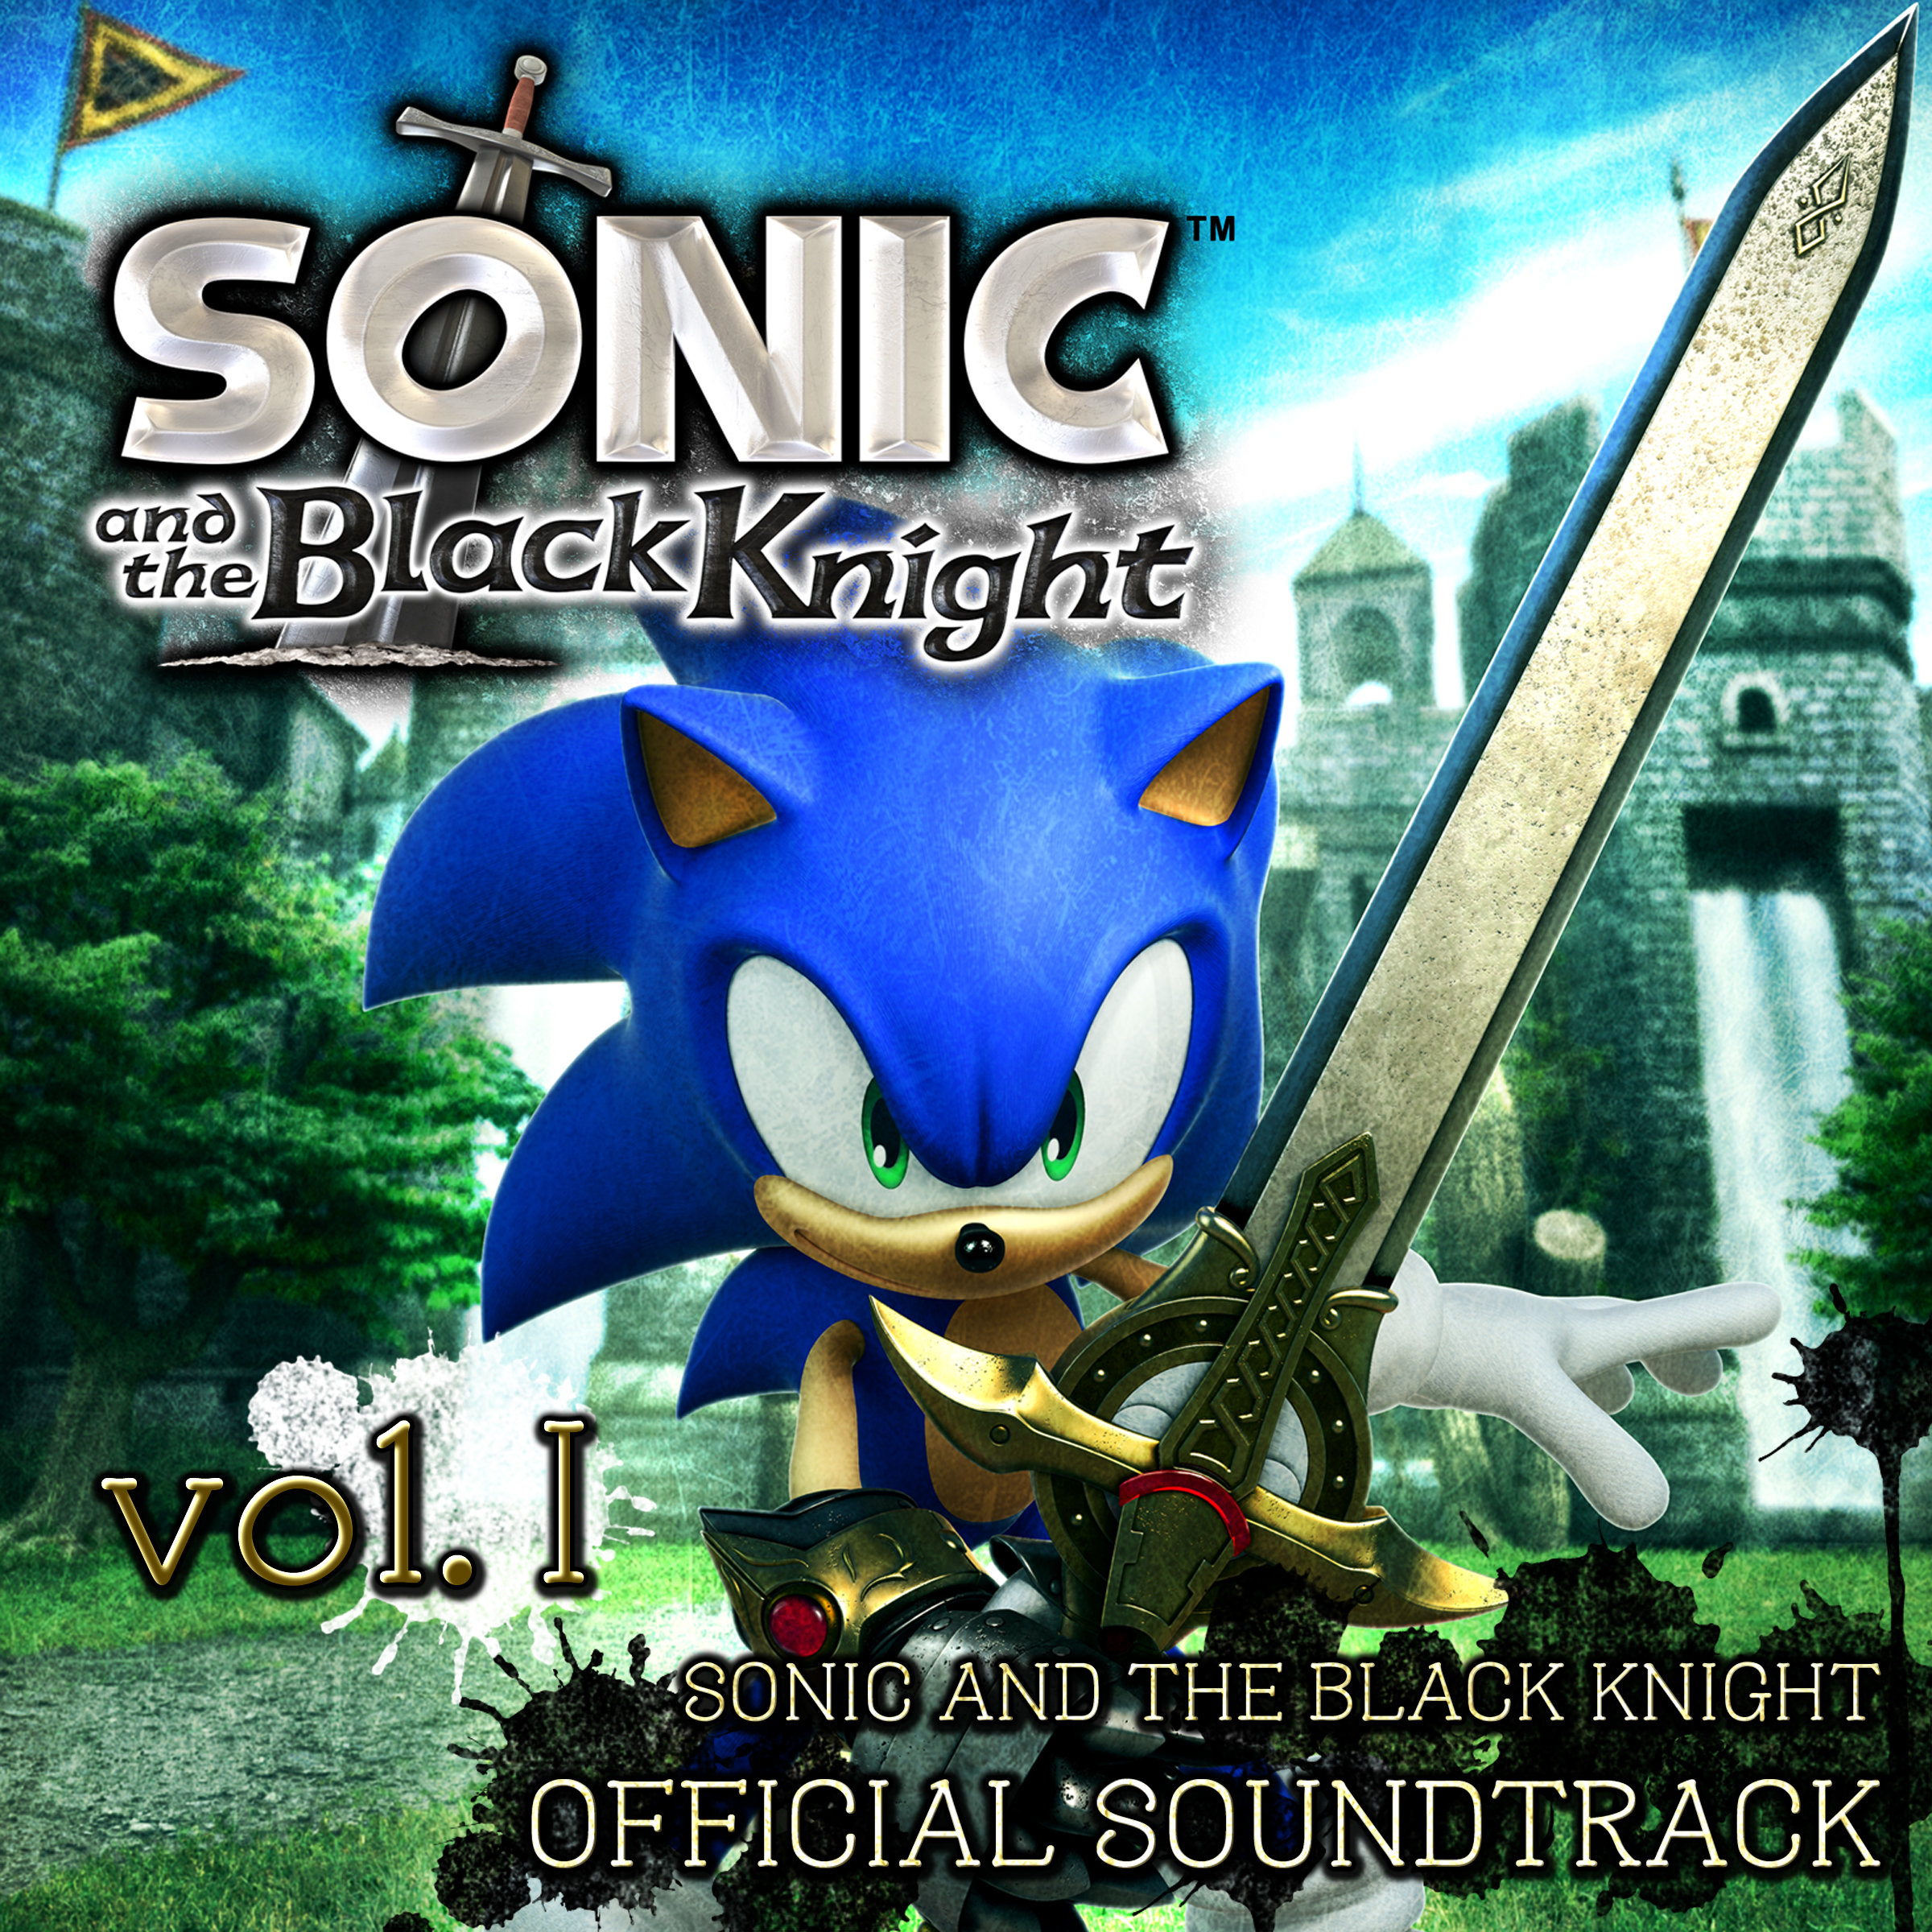 cave story original soundtrack download